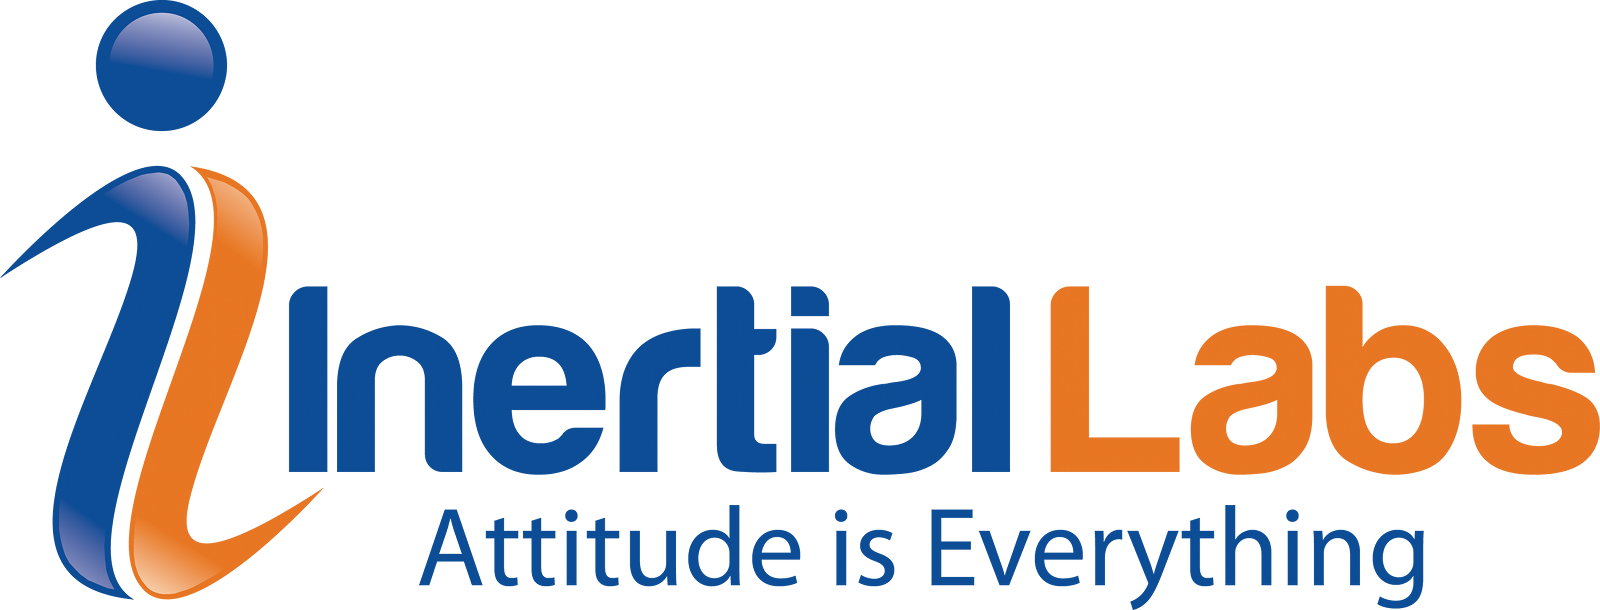 Inertial Labs